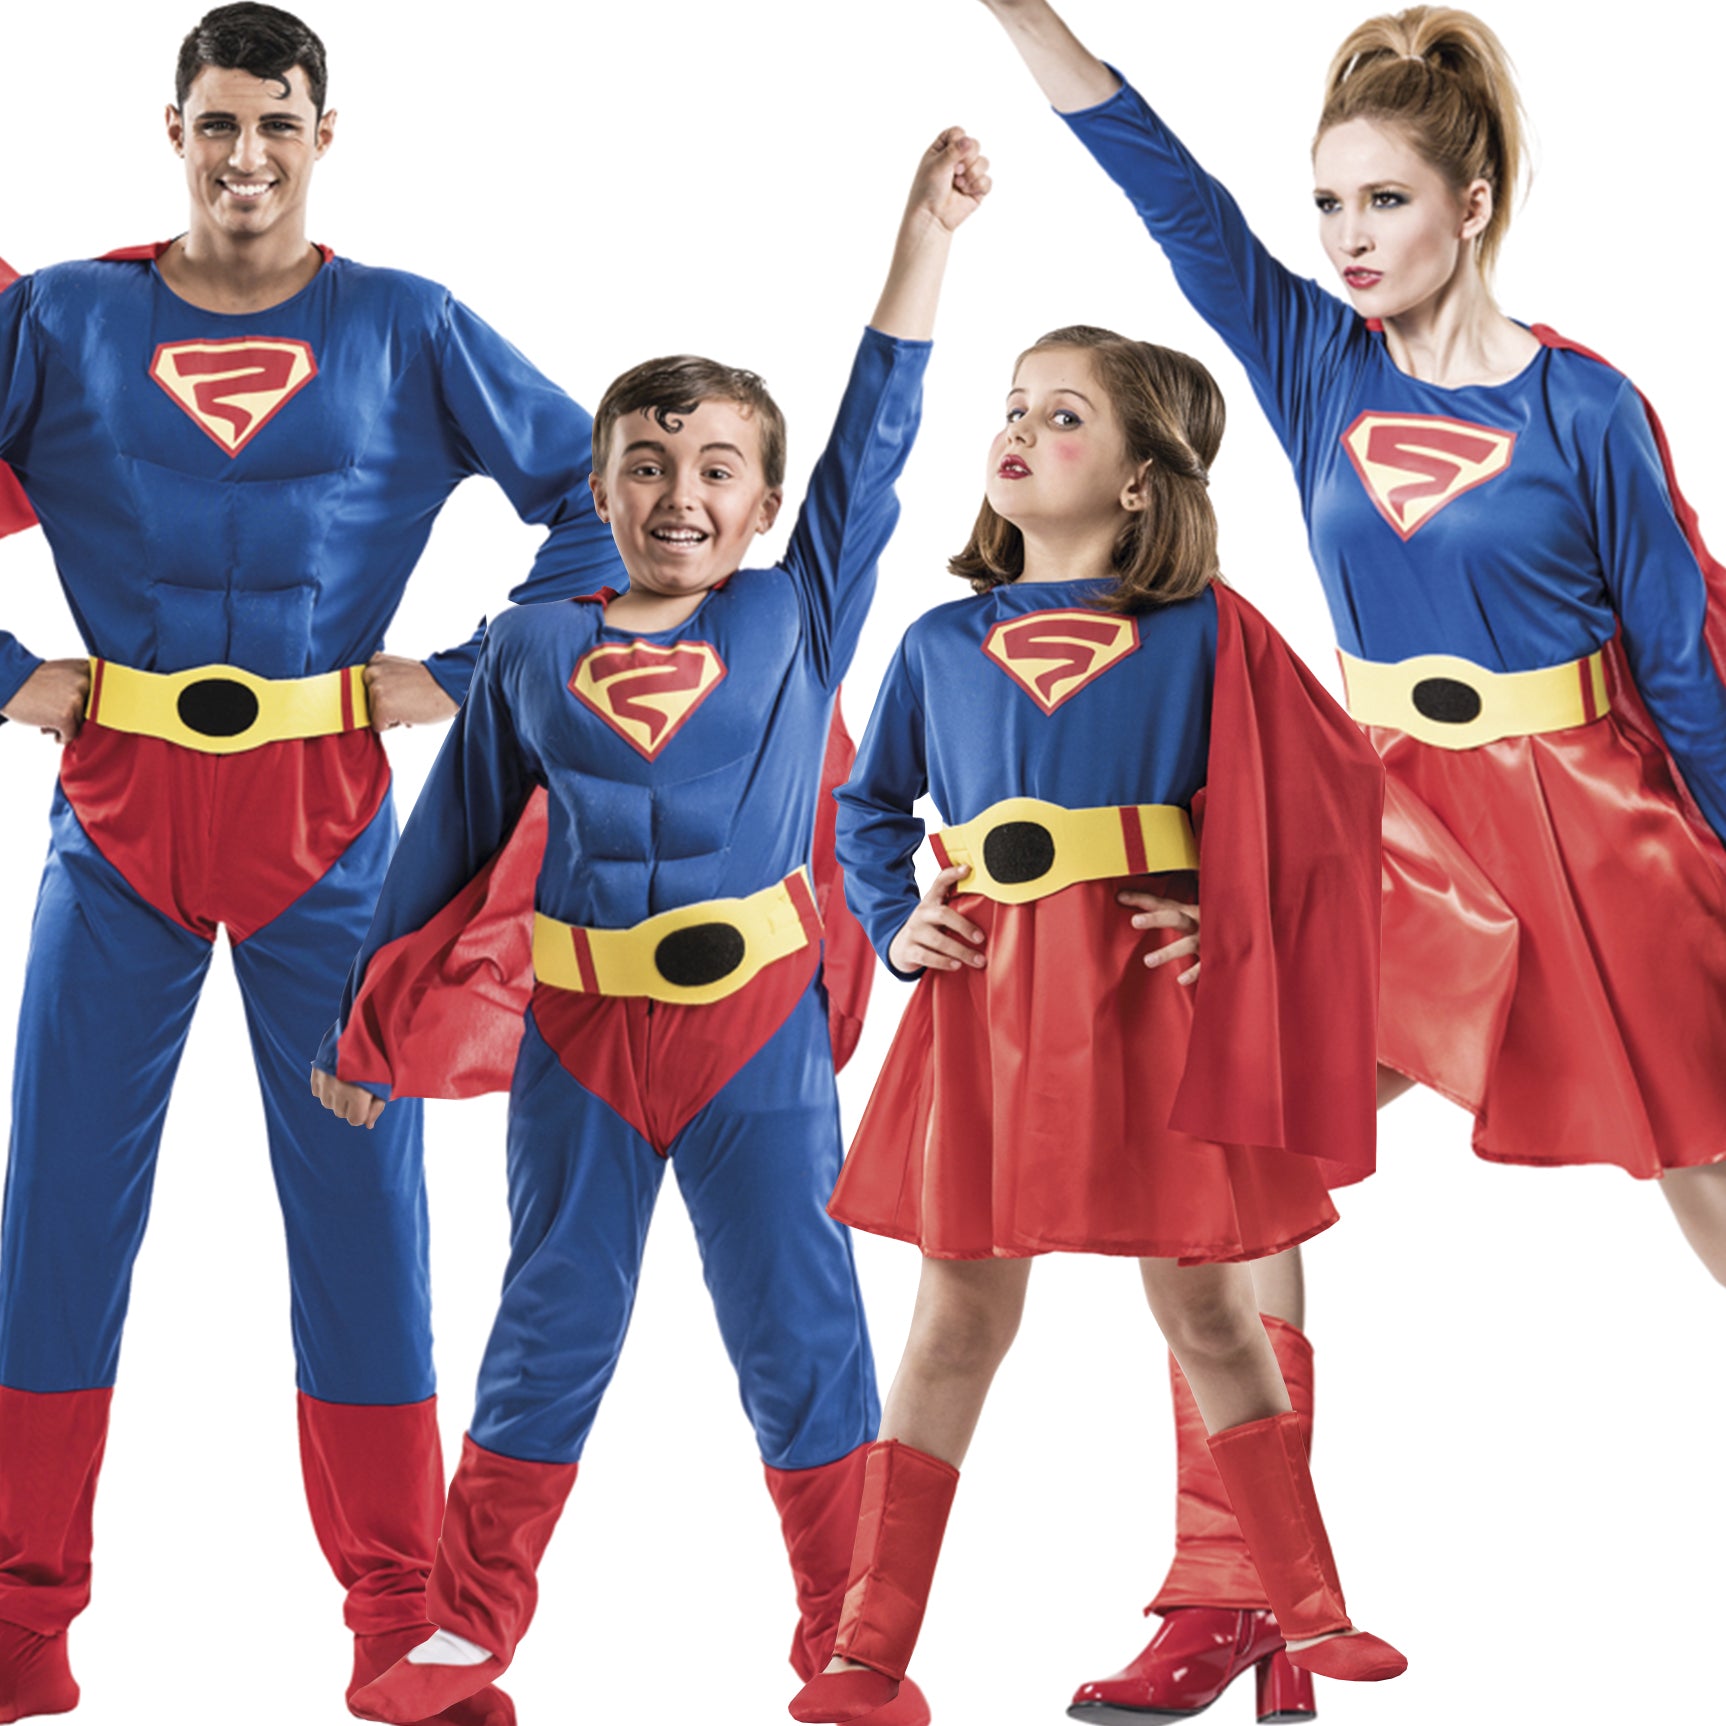 Acquista: Costumi di gruppo da Superman